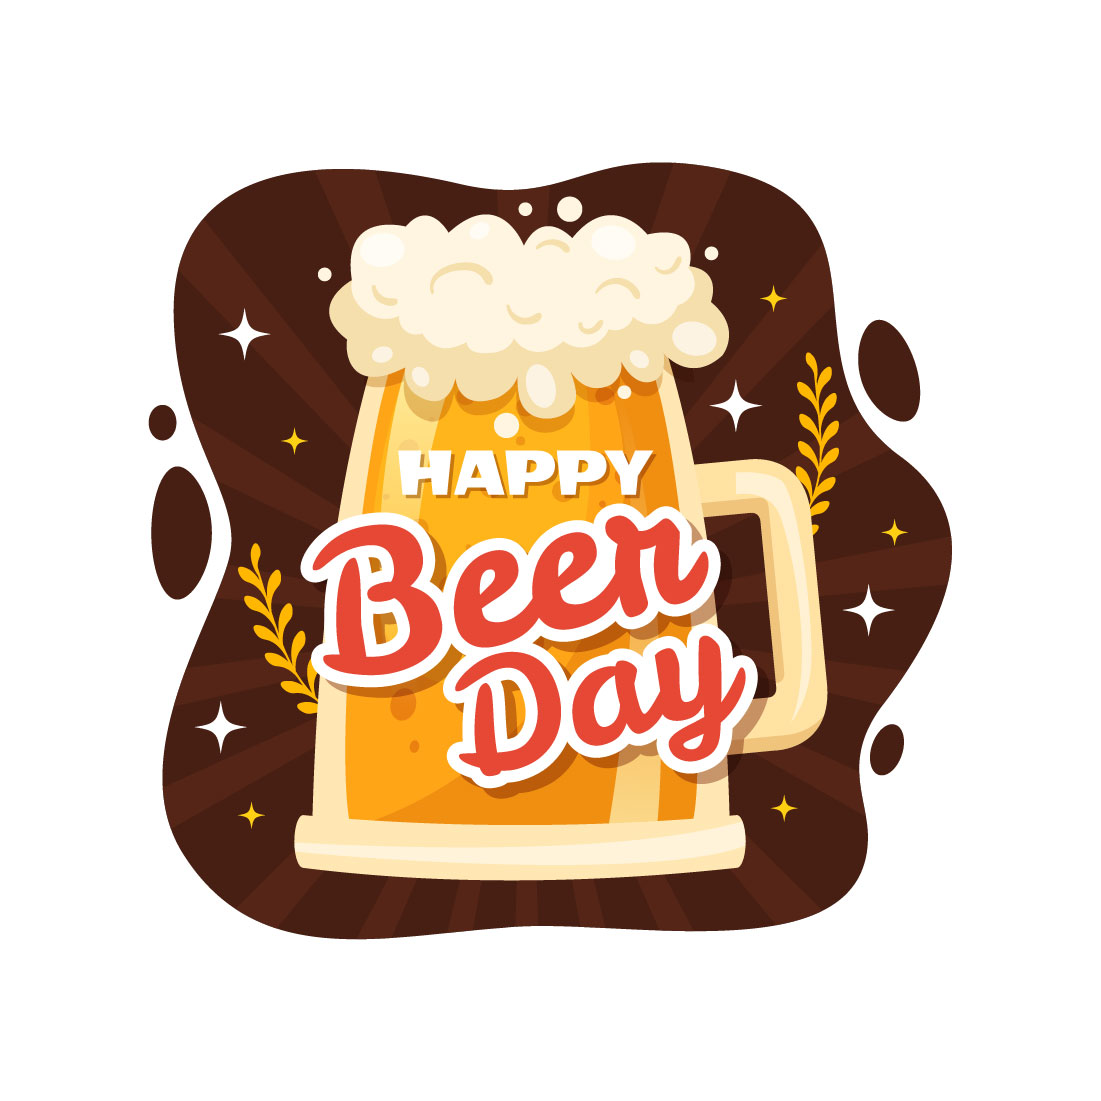 17 International Beer Day Illustration preview image.